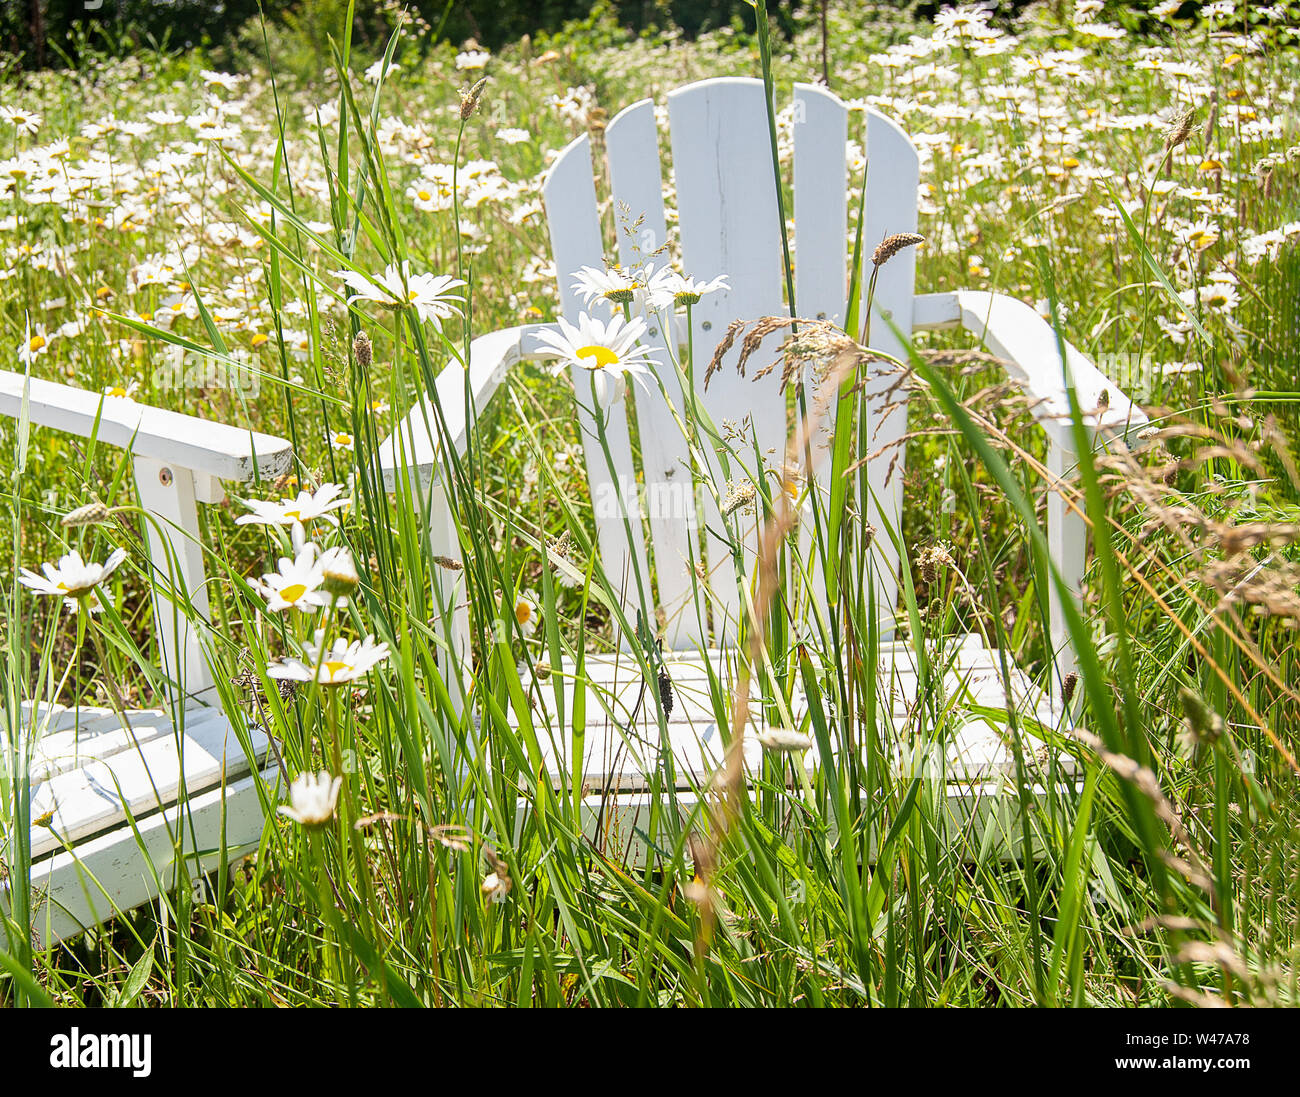 white wooden Adirondack chair in daisy wildflower field Stock Photo